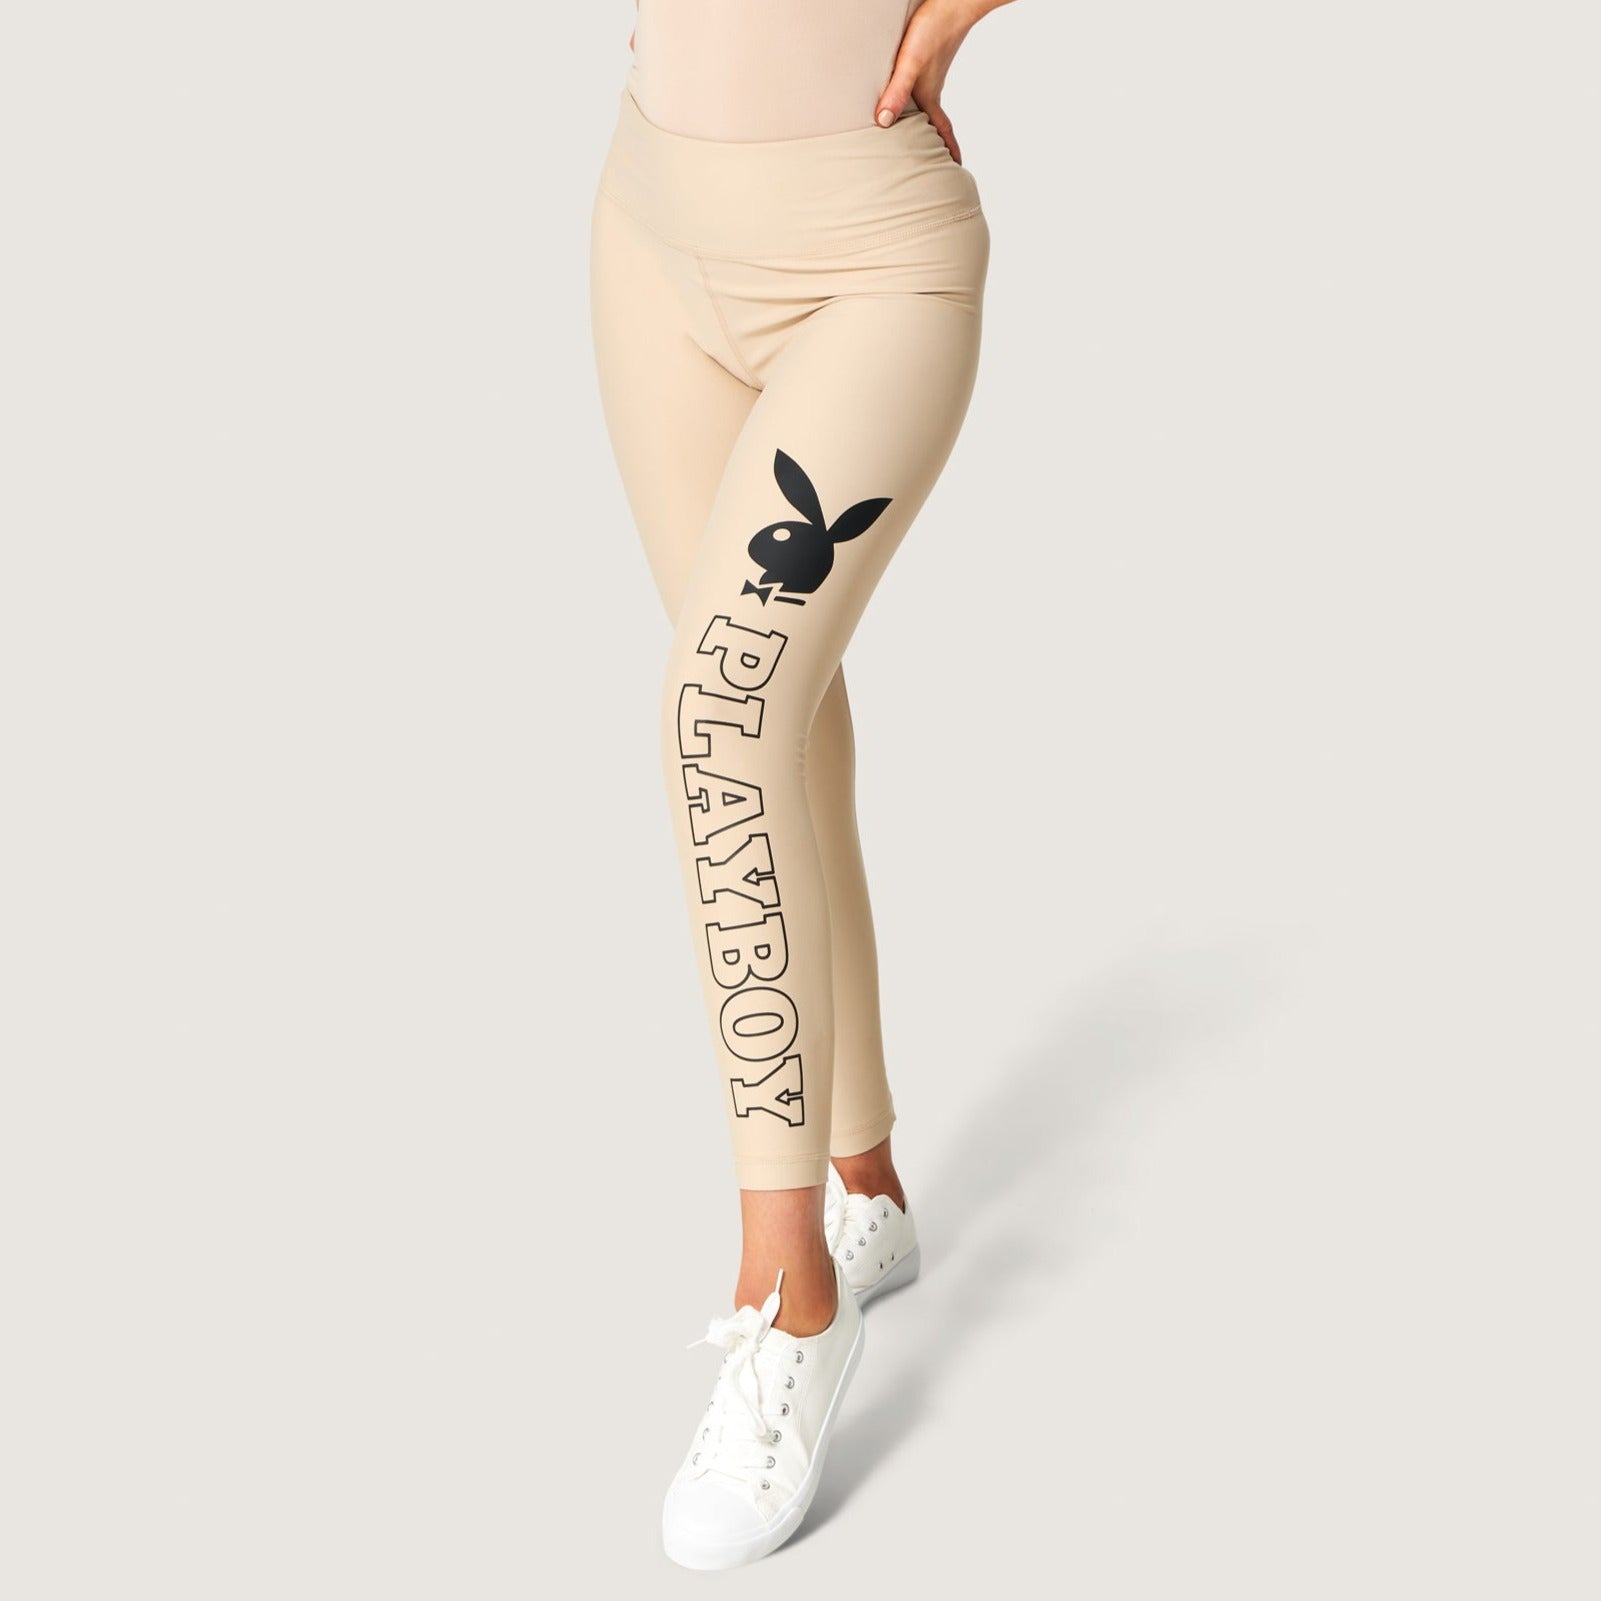 Calças Playboy Lojas - Active Branded Legging Mulher Verdes